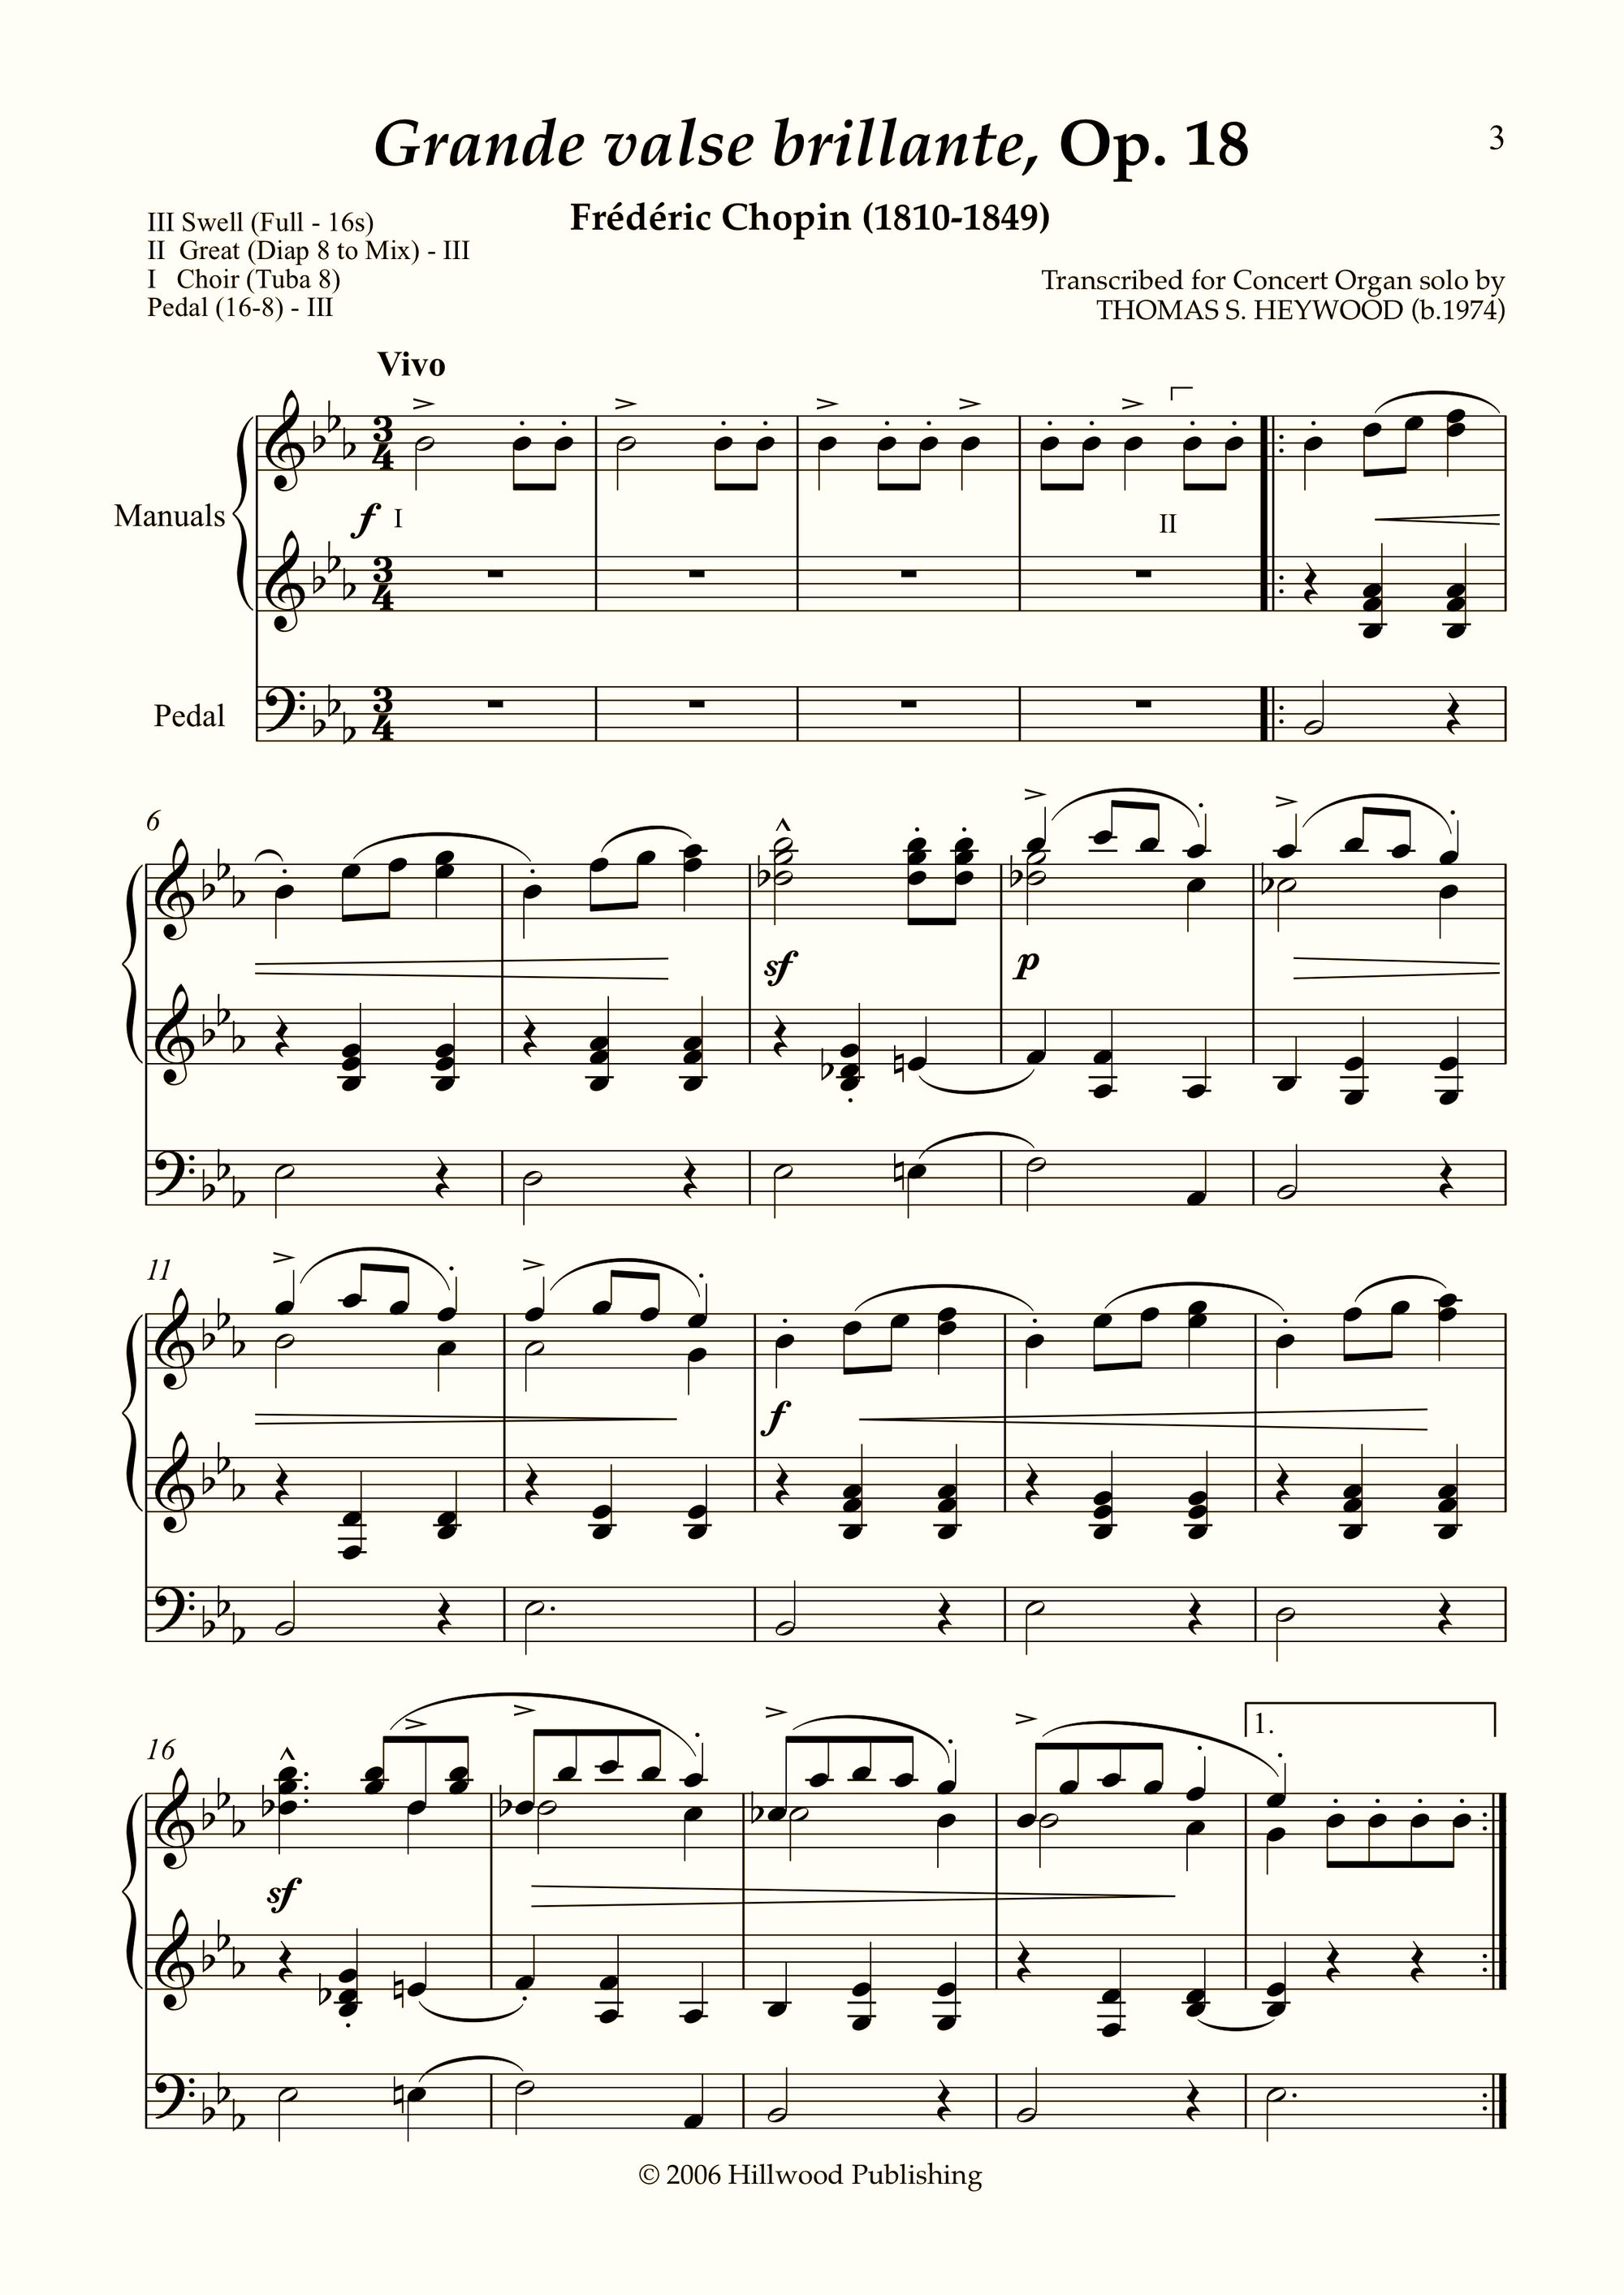 Chopin/Heywood - Grande valse brillante, Op. 18 (Score) | Thomas Heywood | Concert Organ International